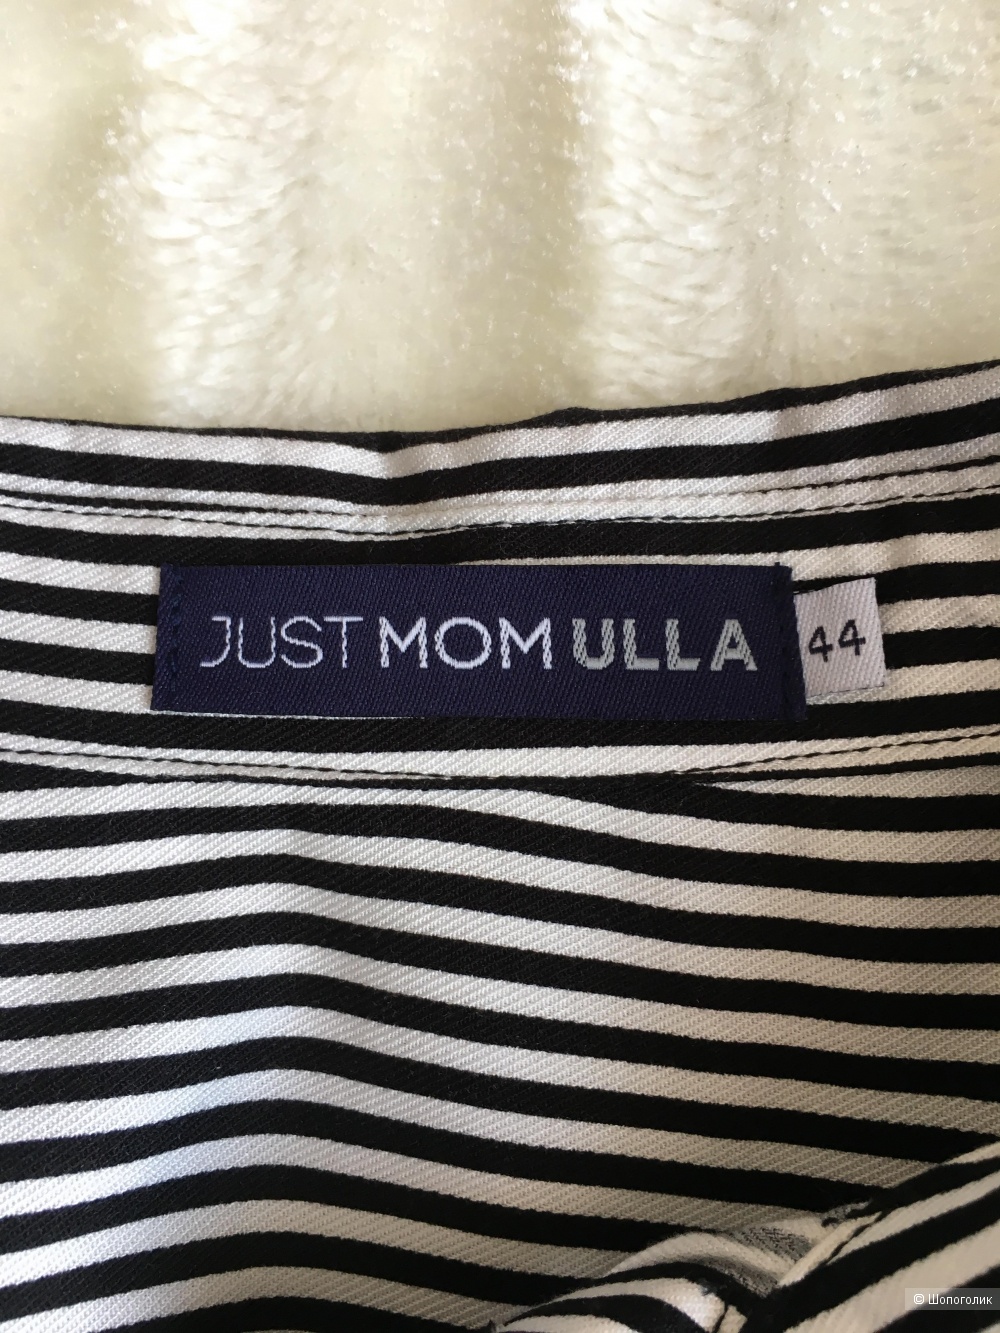 Рубашка «Just mom ulla», размер,44